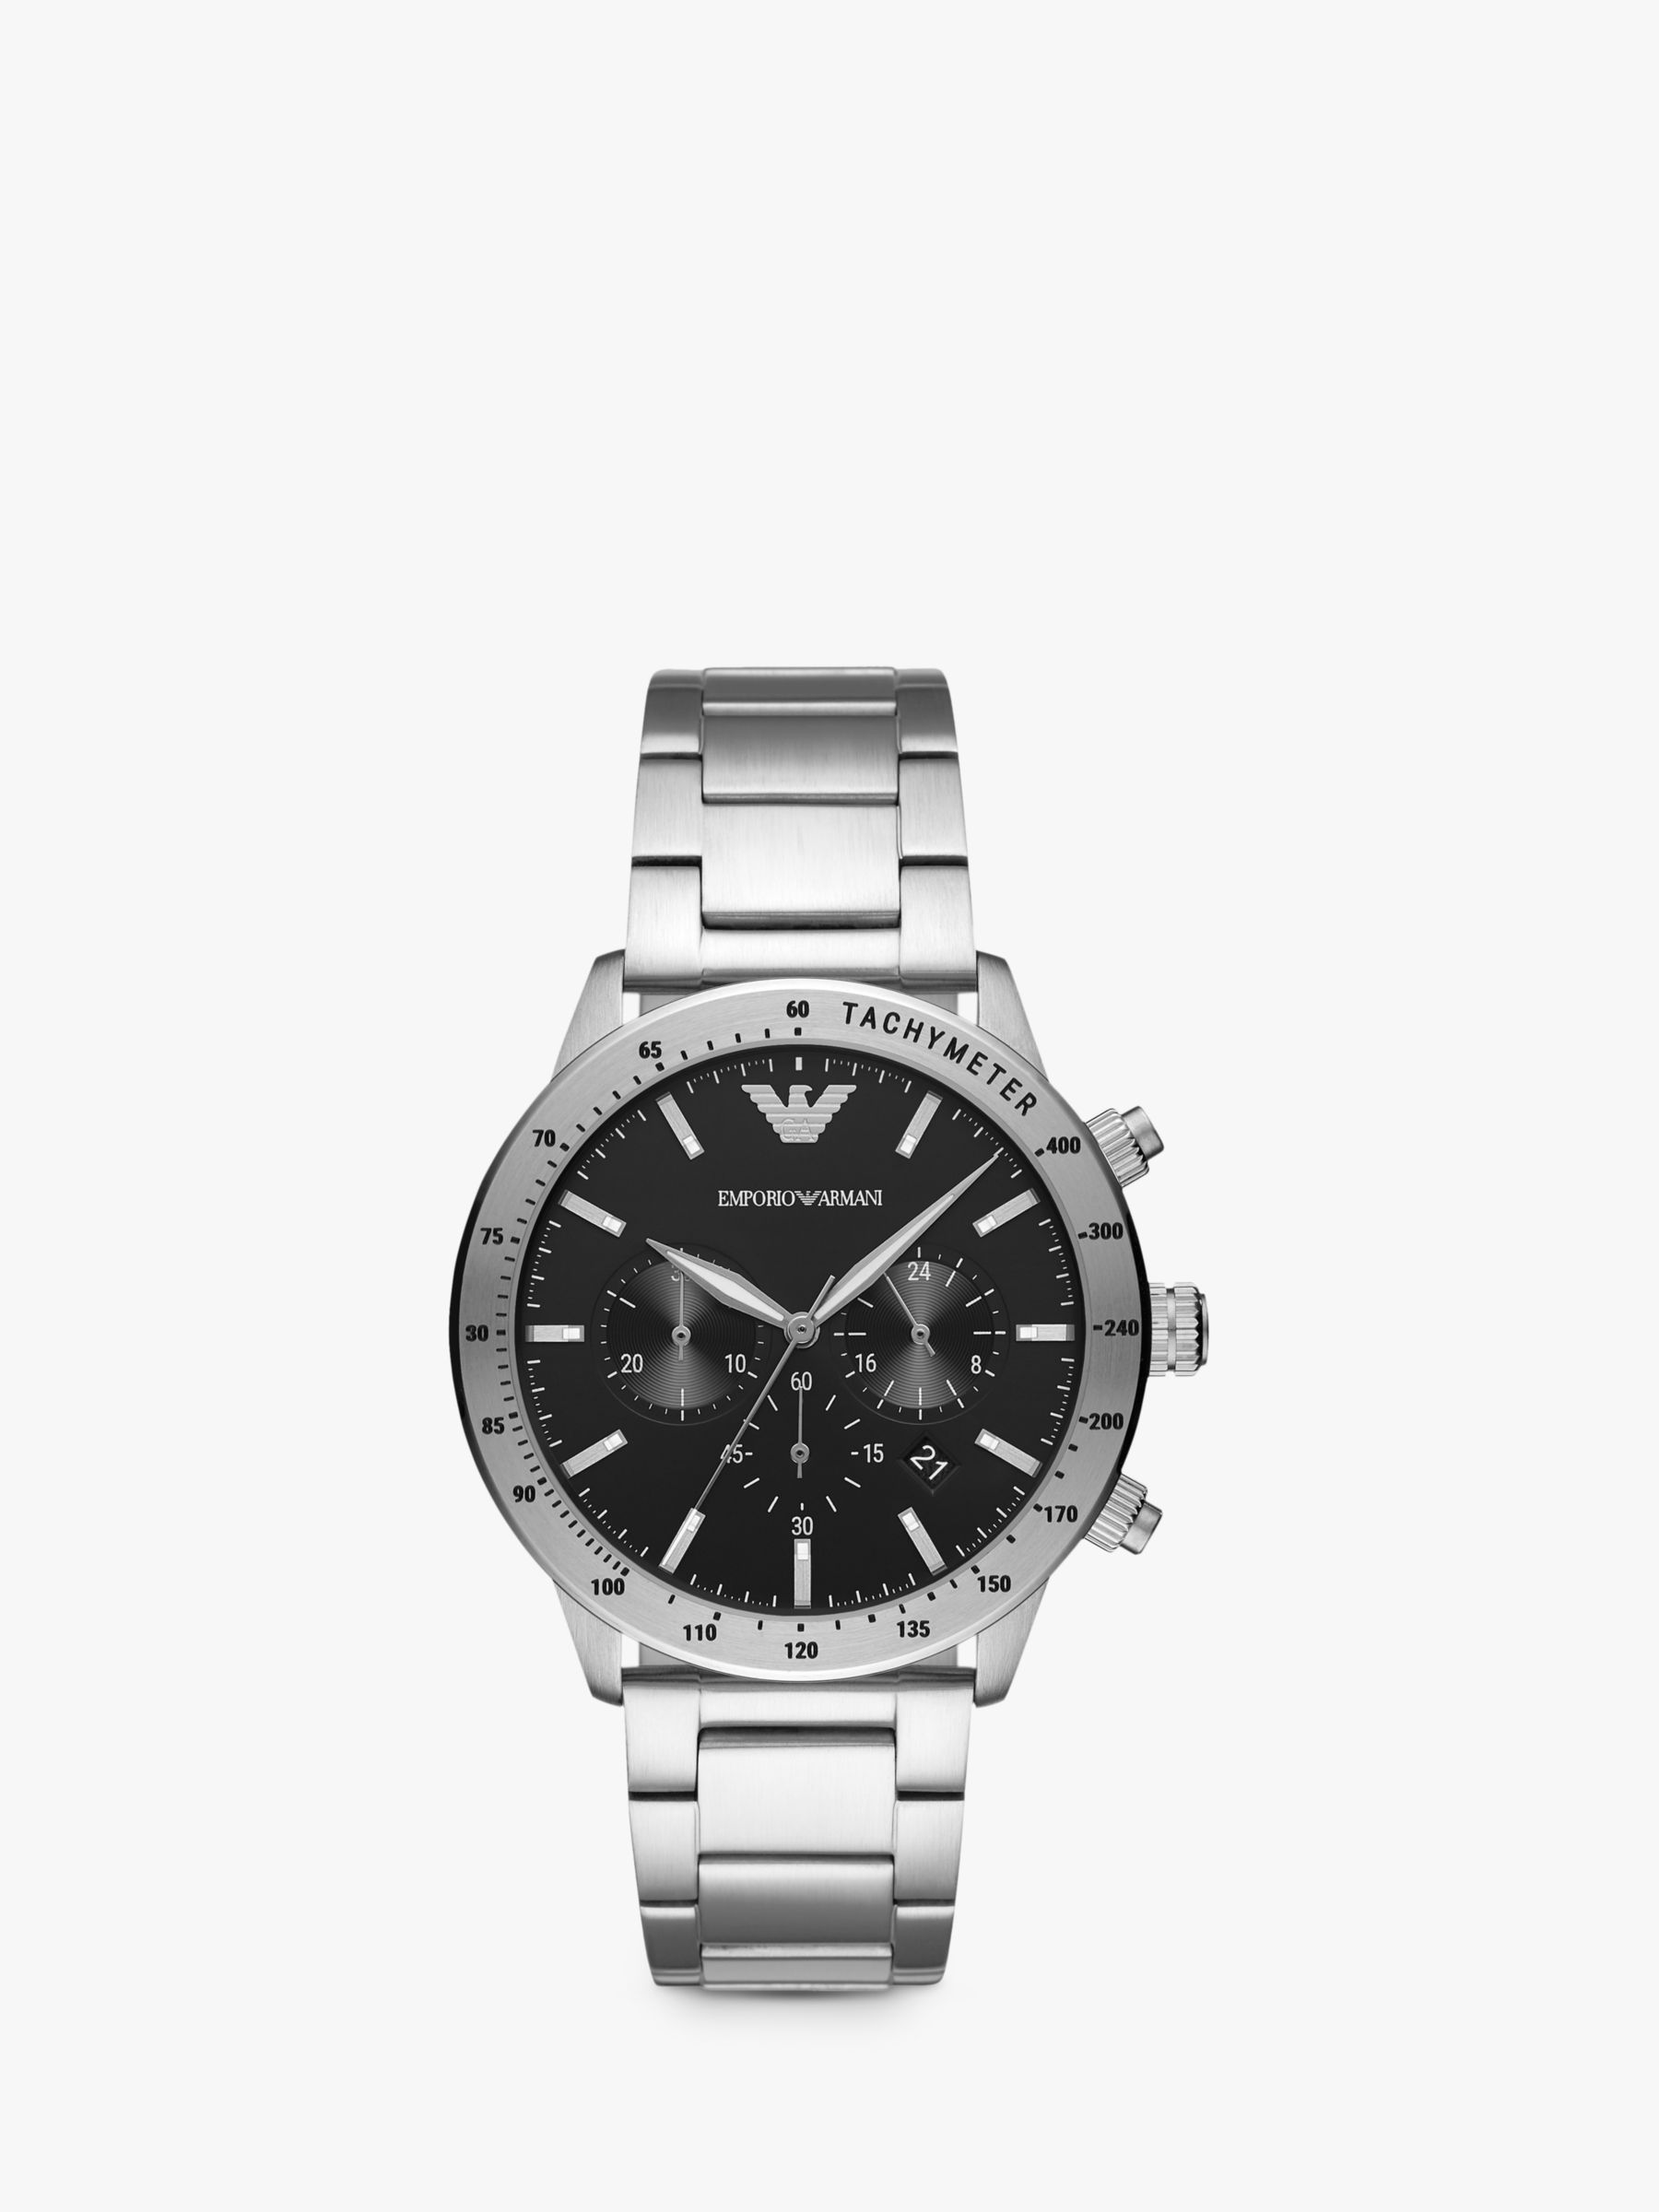 Emporio Armani Men's Watches | John Lewis & Partners